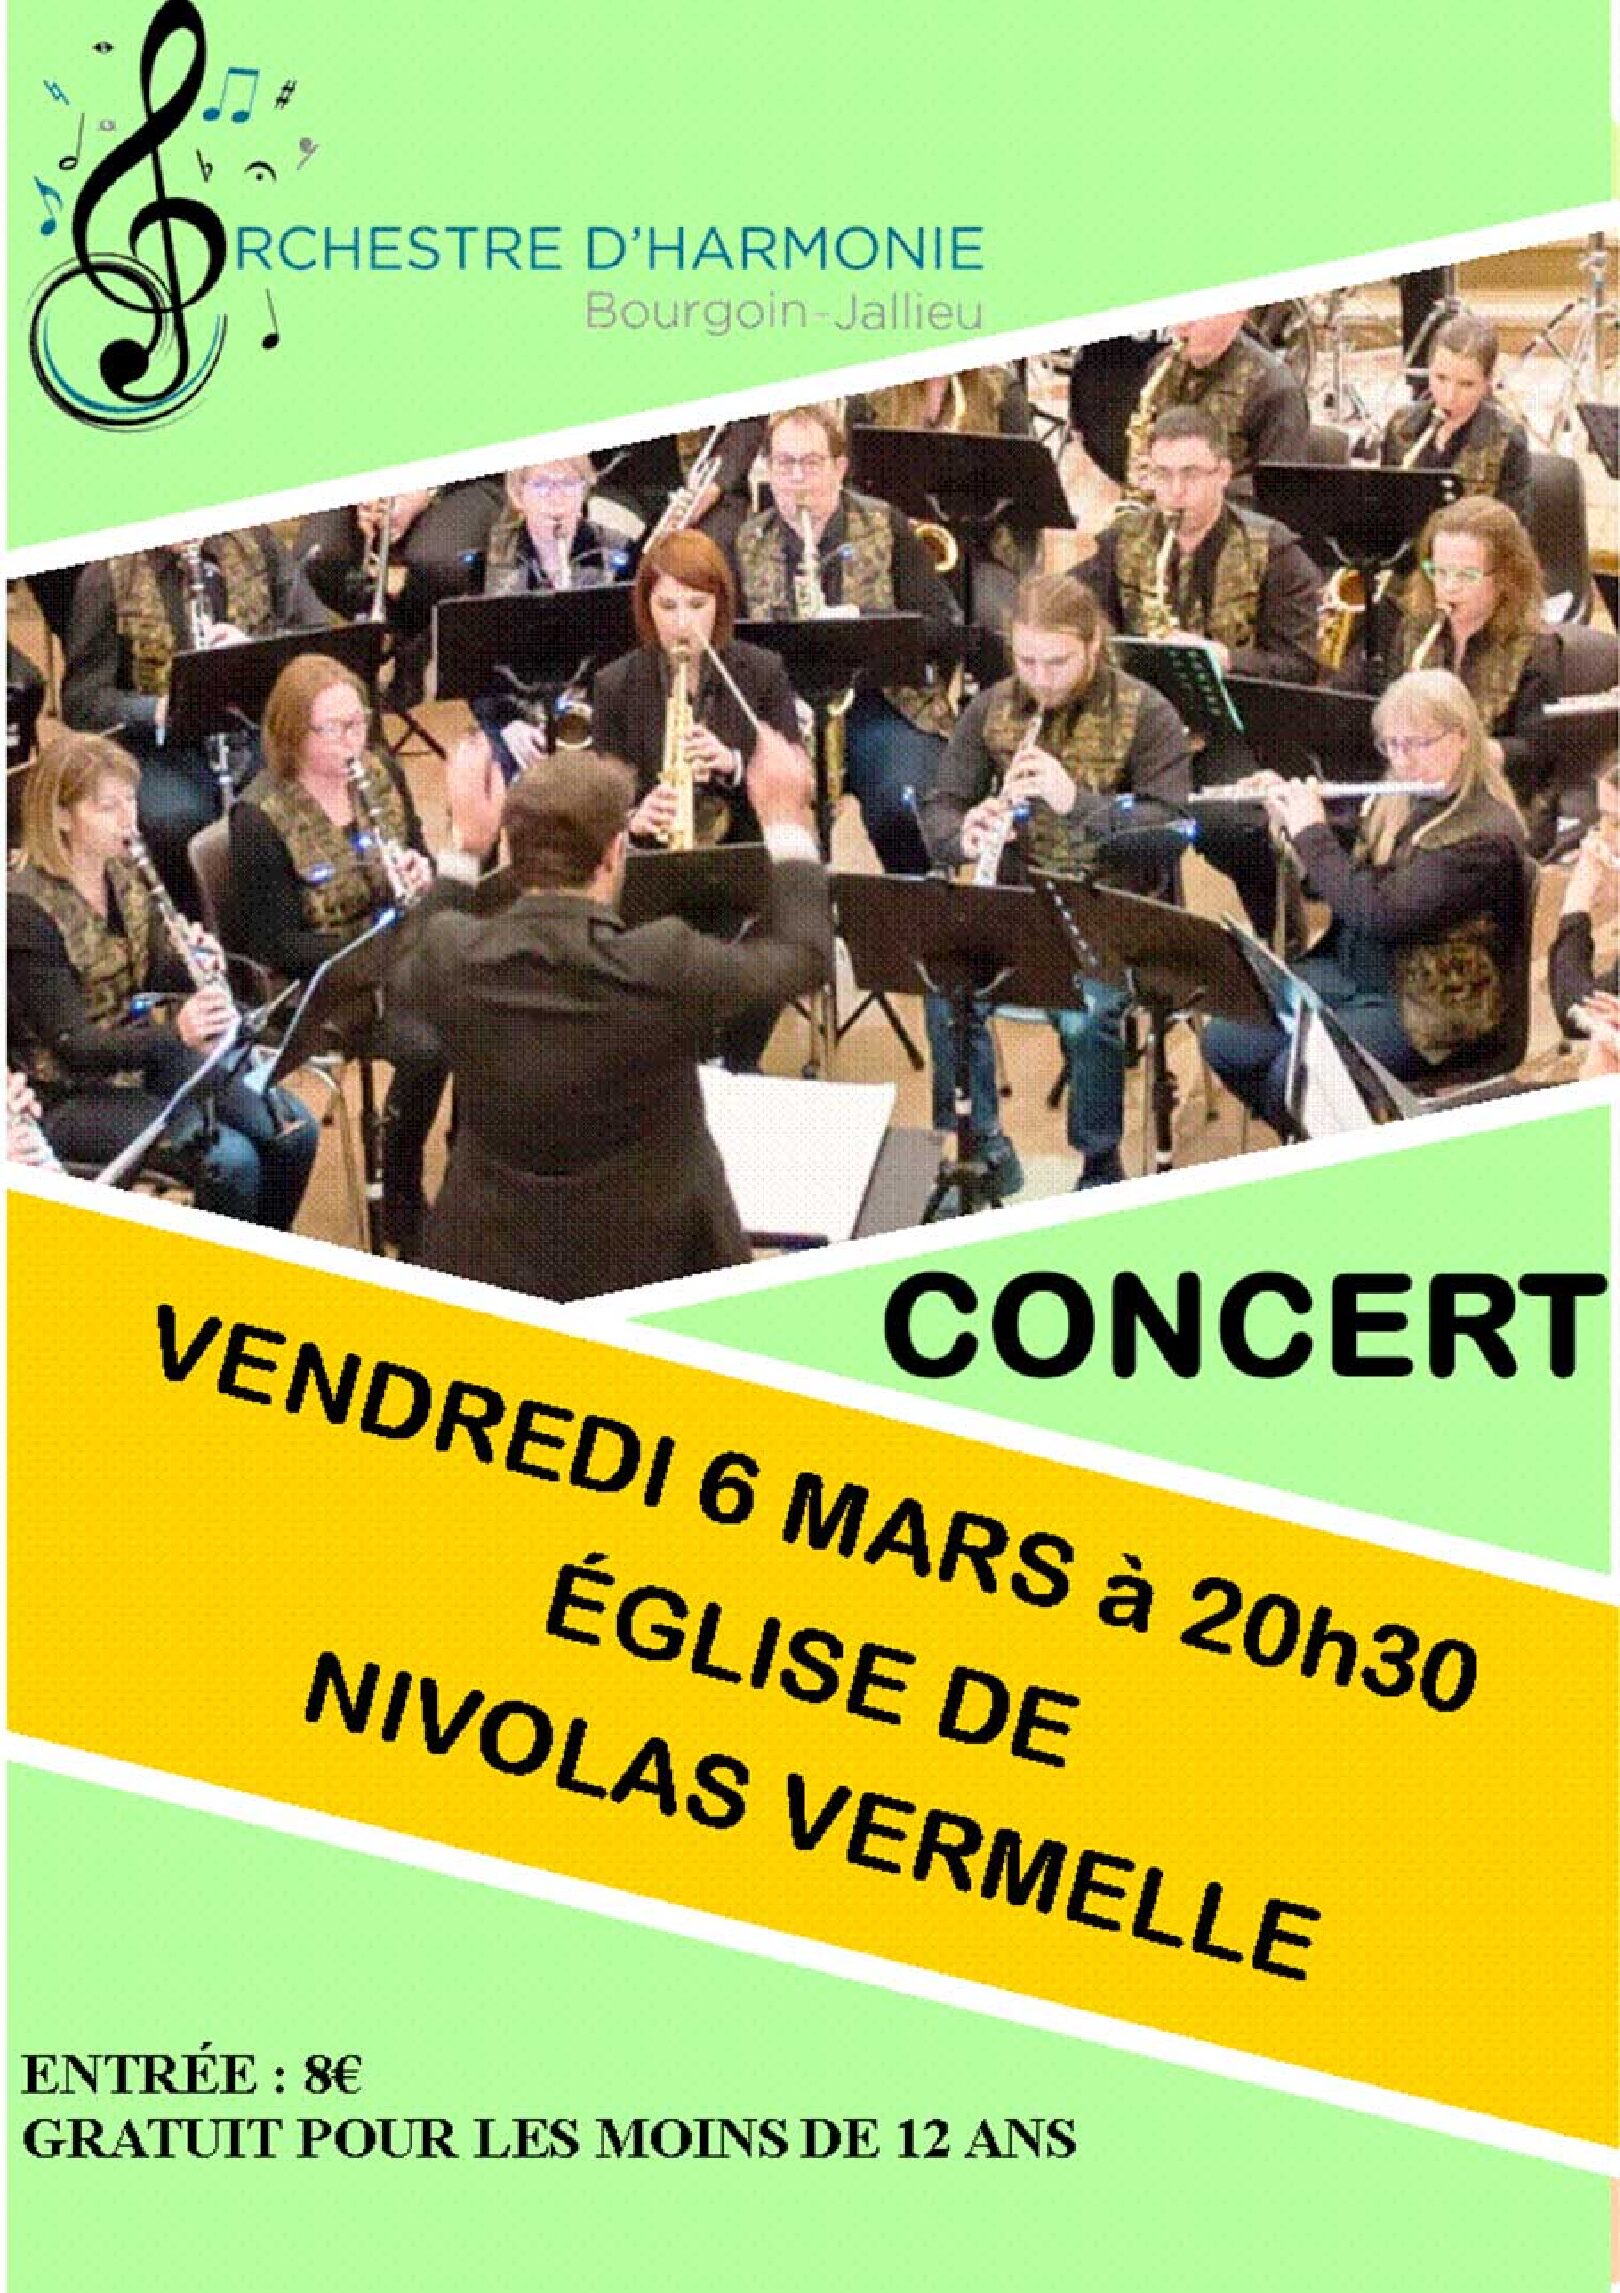 Concert à Nivolas